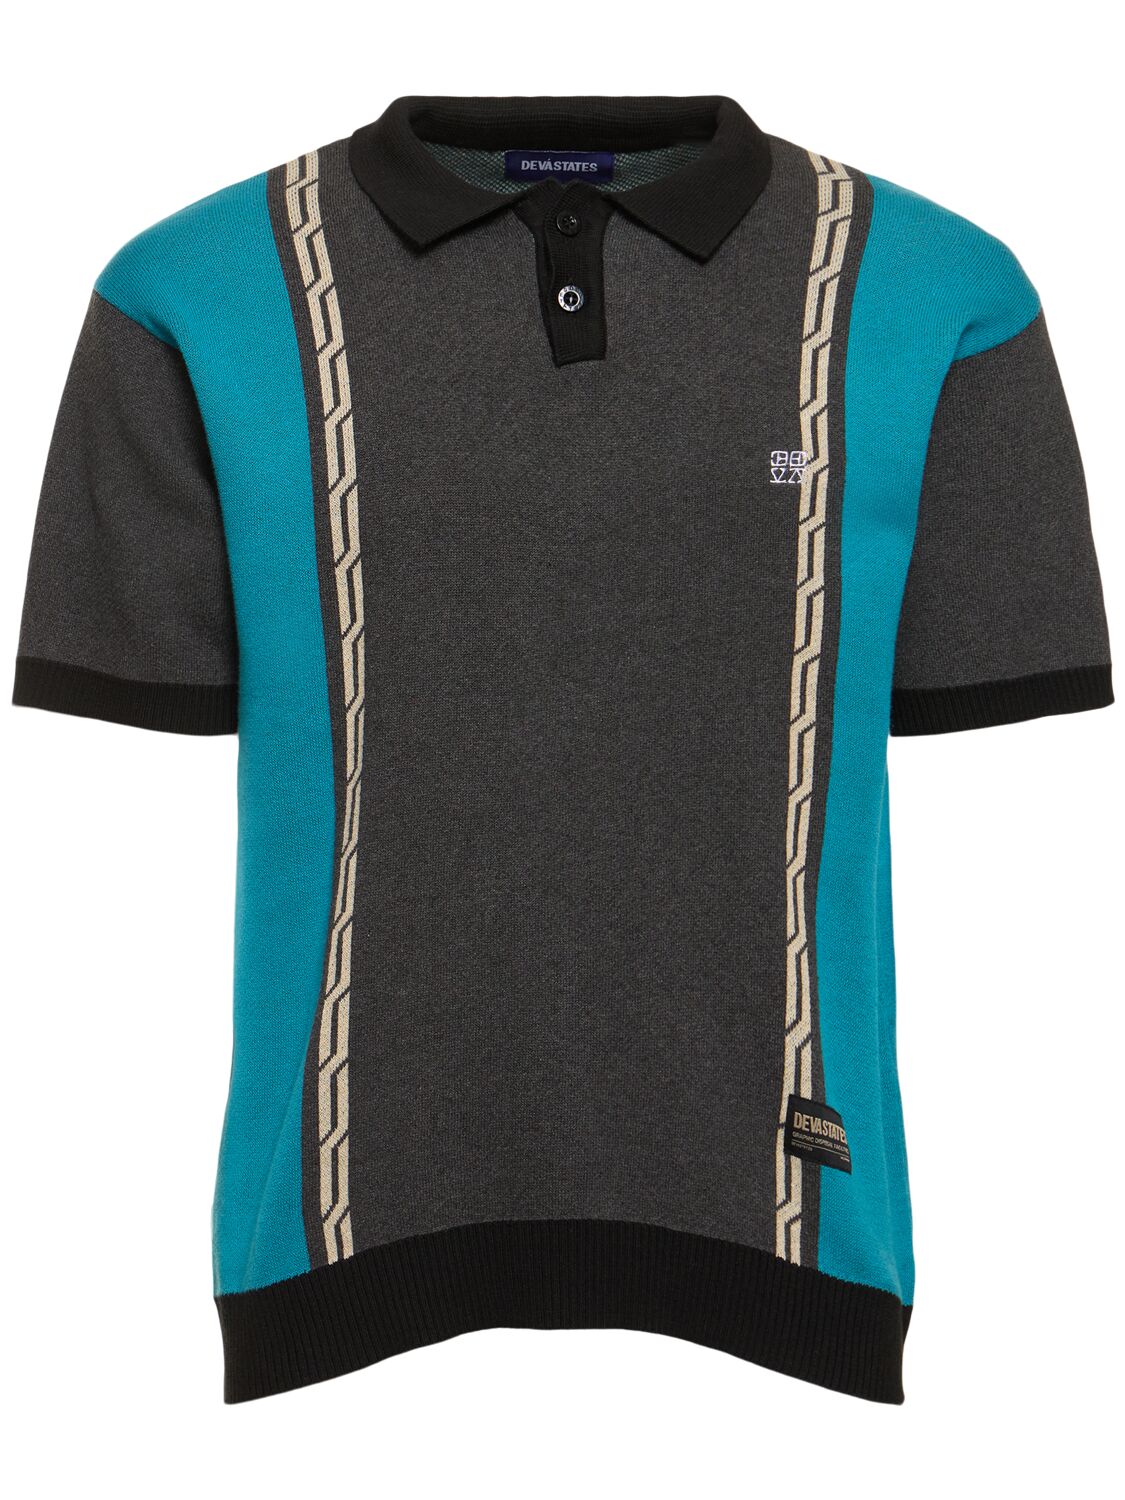 Deva States Chain Jacquard Knit S/s Polo Shirt In Black